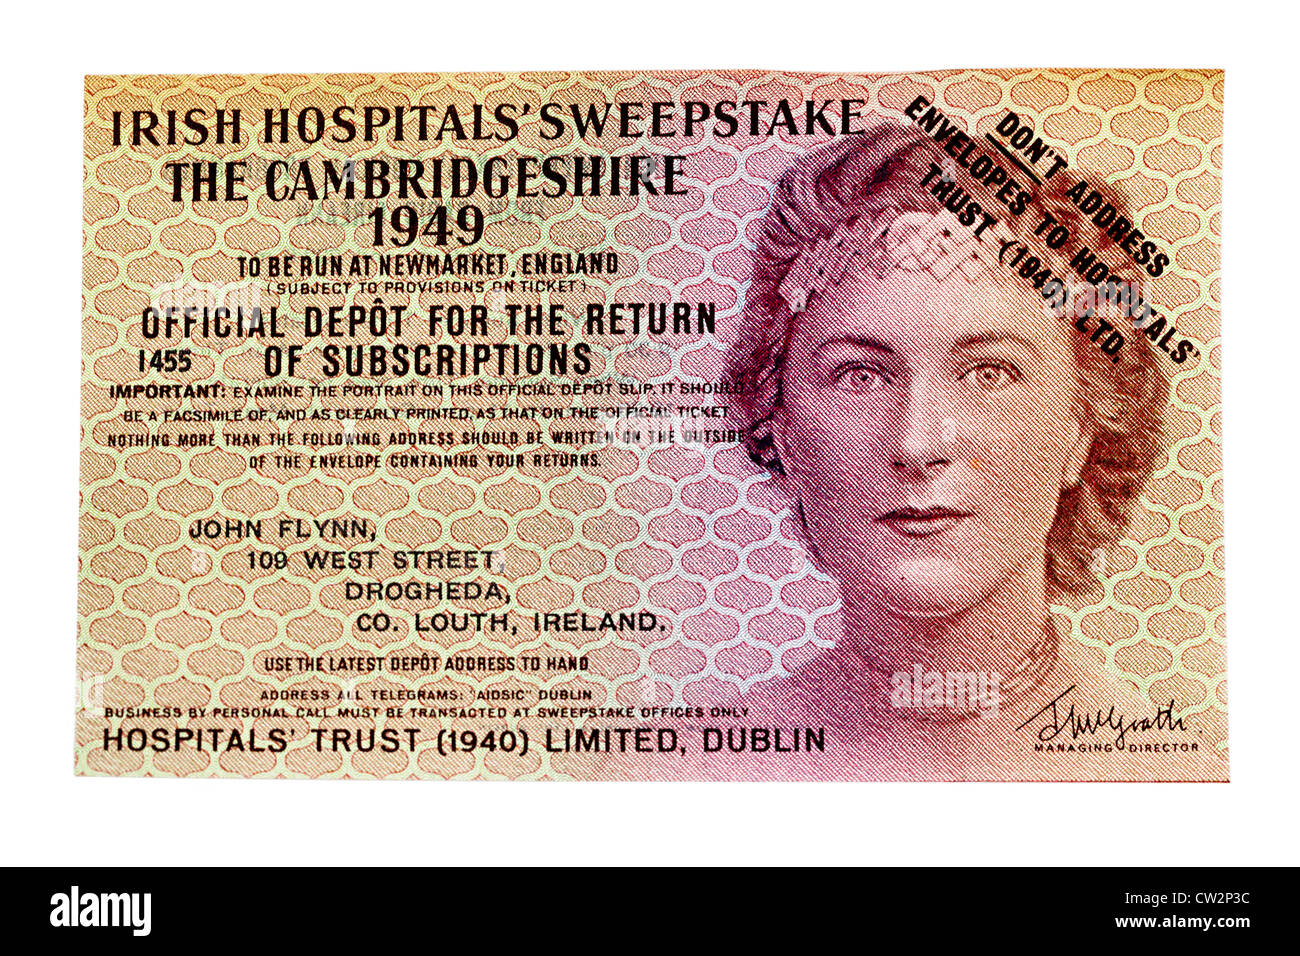 Irish Hospitals' Sweepstake ticket for 1949 Newmarket race Stock Photo